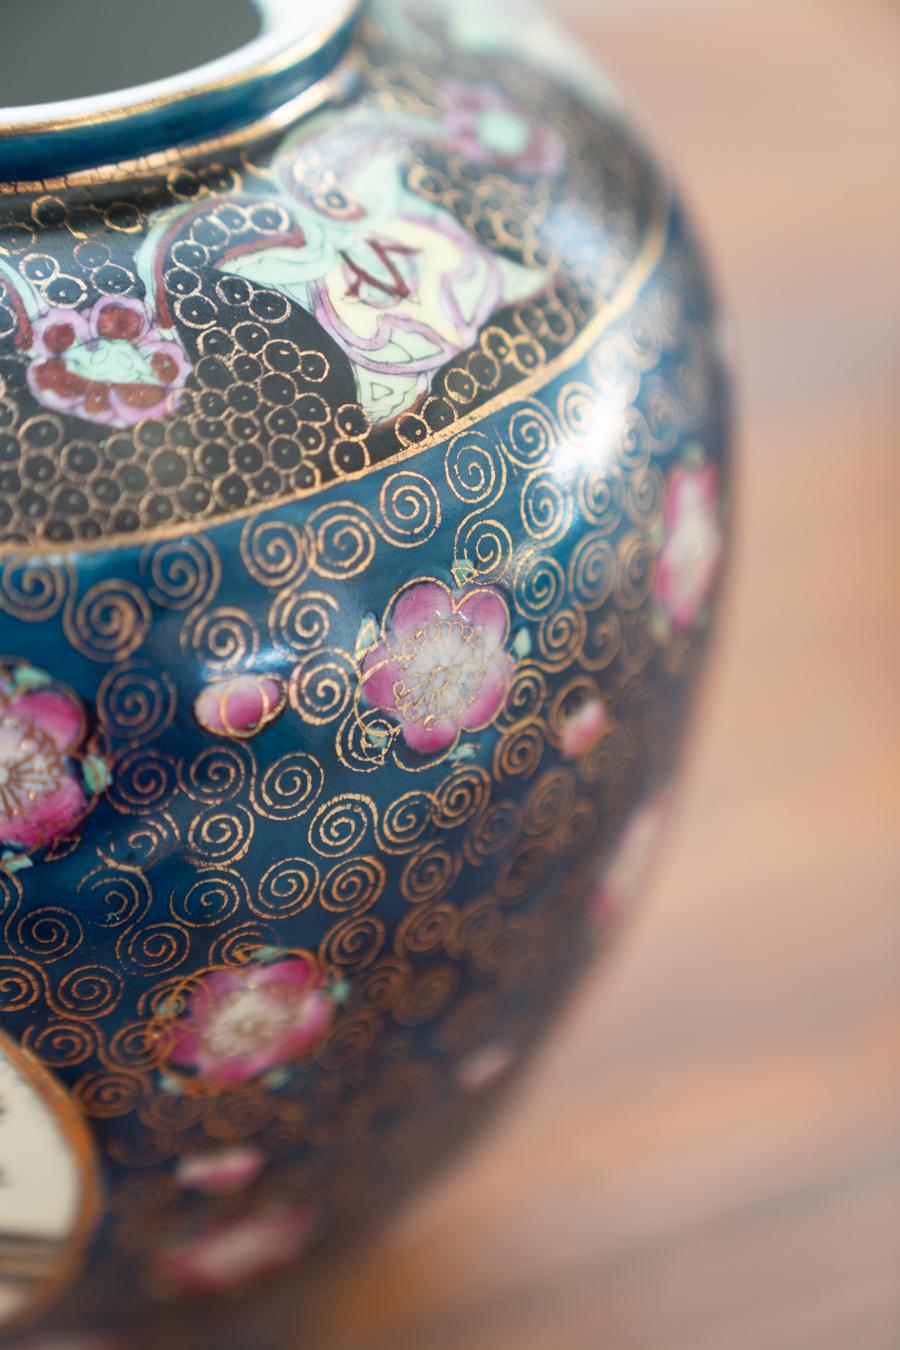 Japanese antique porcelain porcelain vases Meiji period 19th century For Sale 1